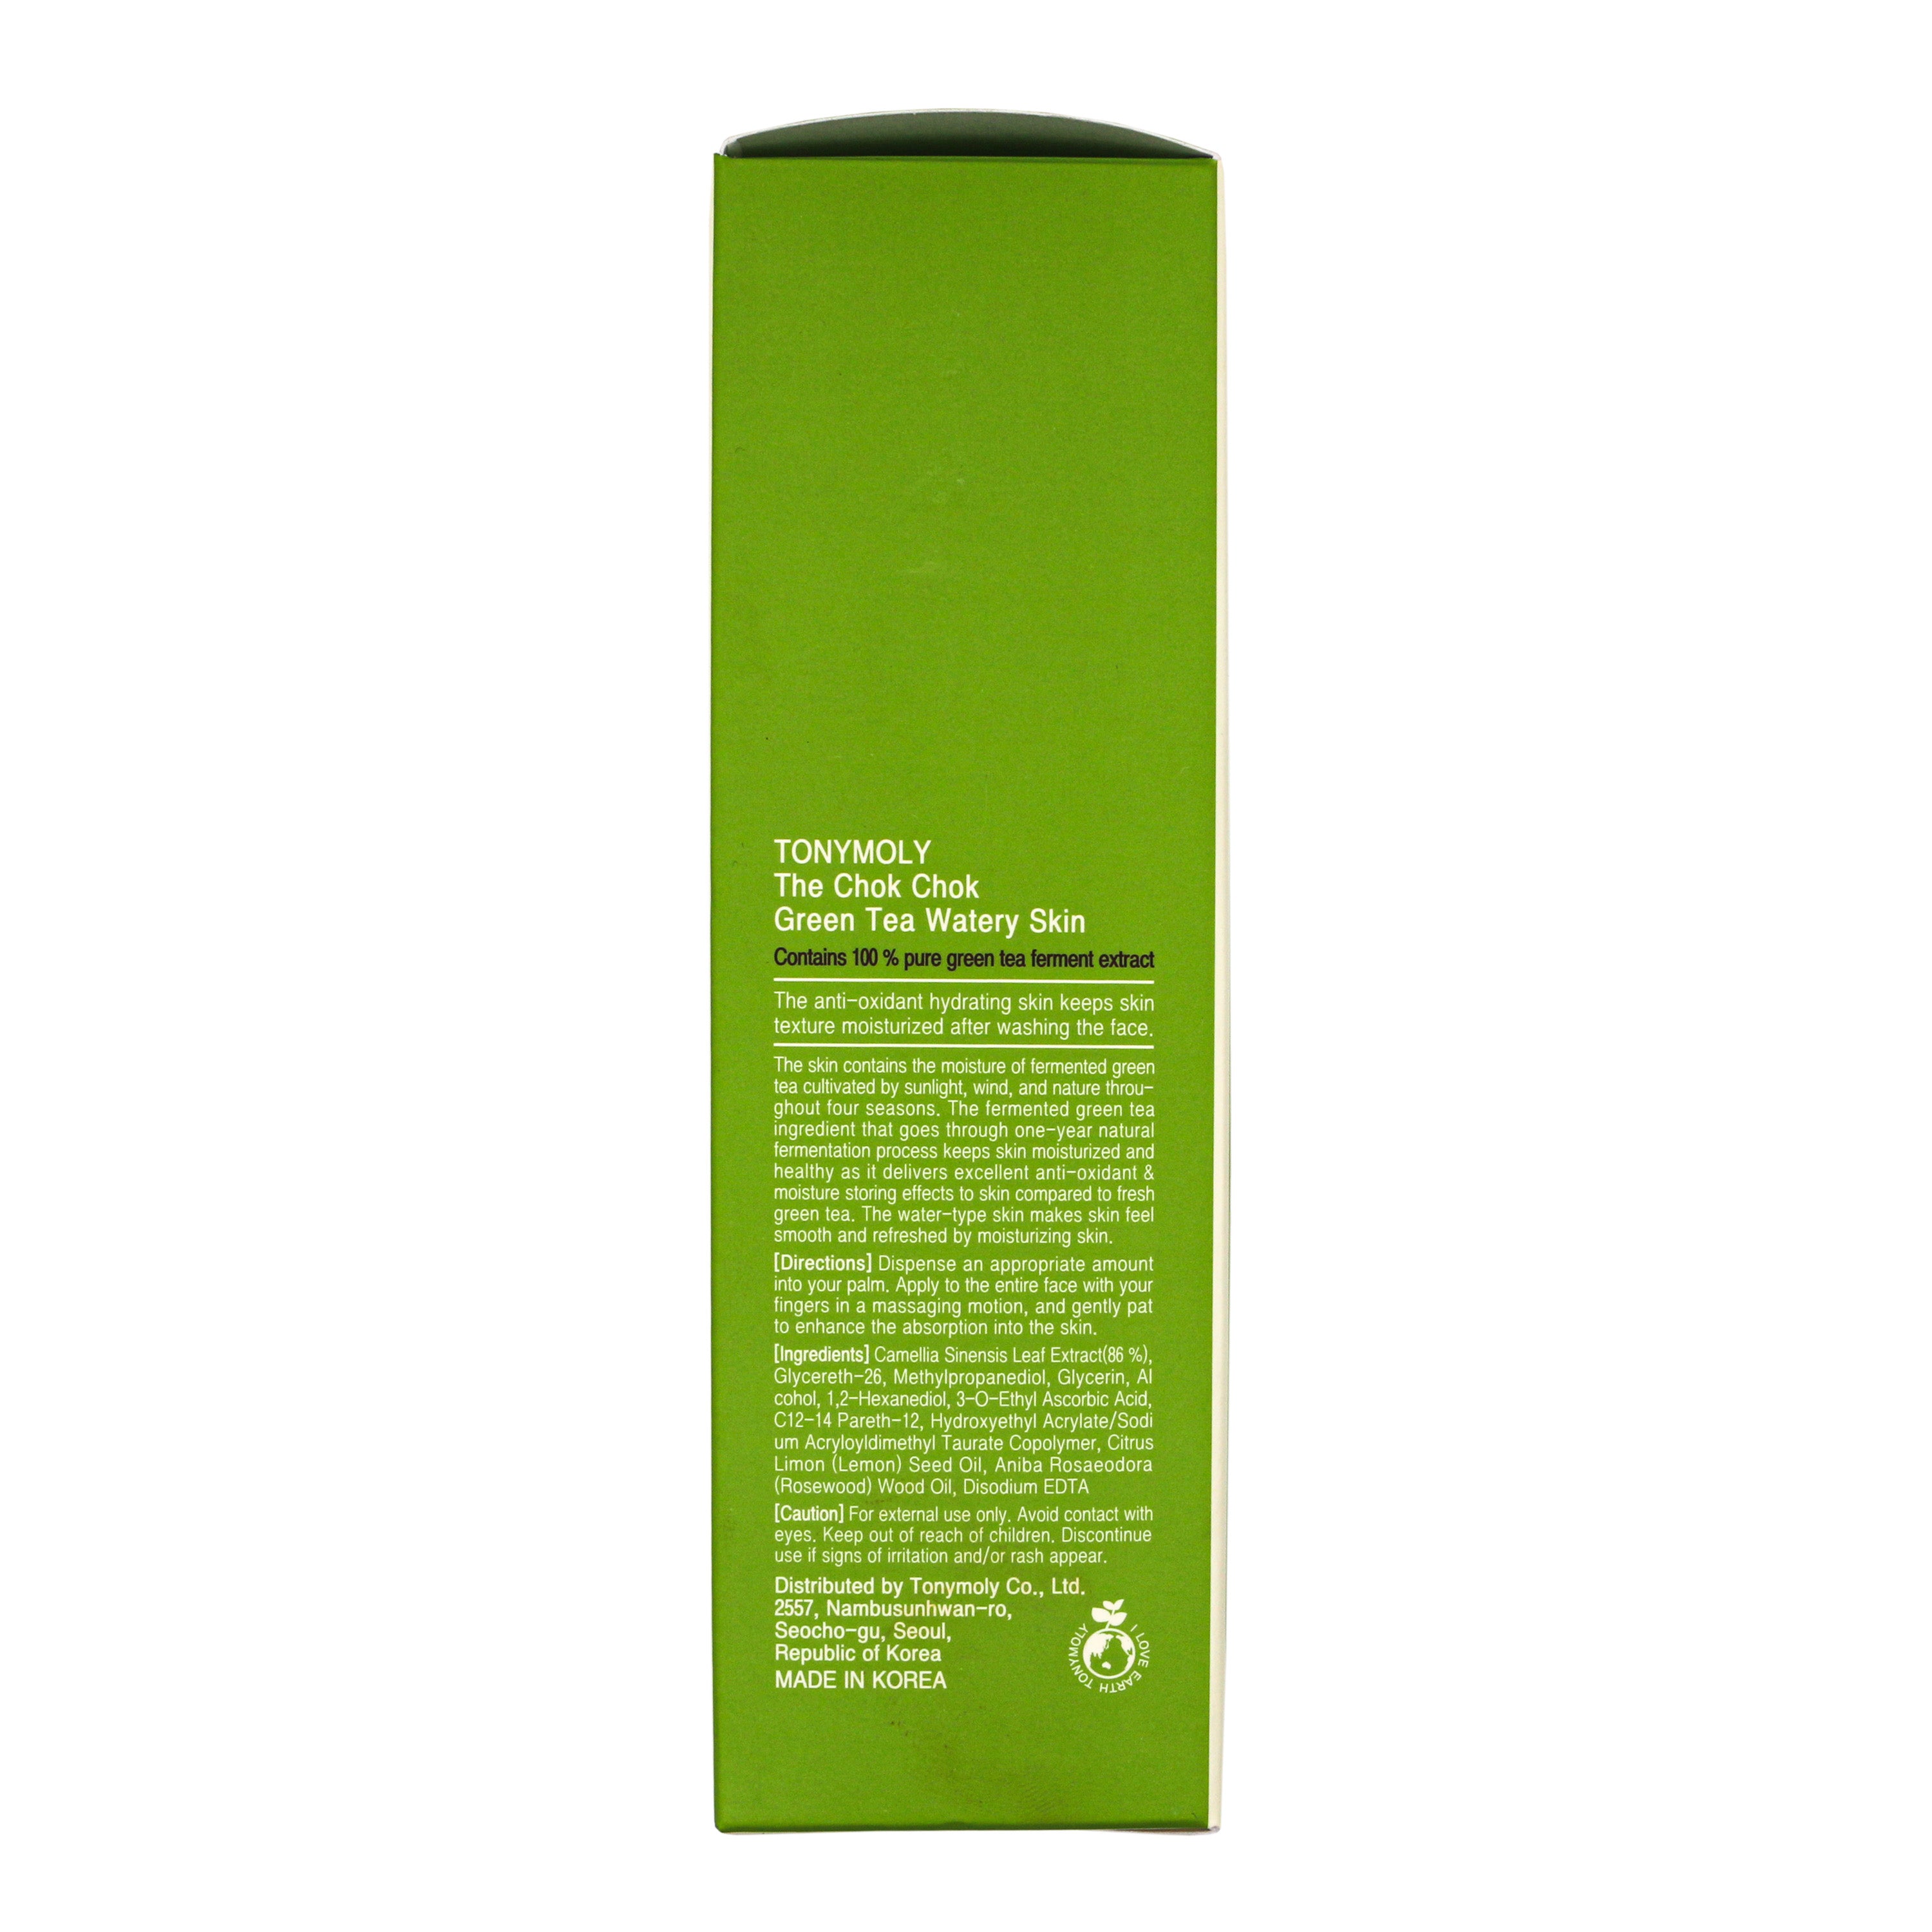 TONYMOLY The Chok Chok Green Tea Watery Skin (Toner) - 180ml | Korean Skin Care